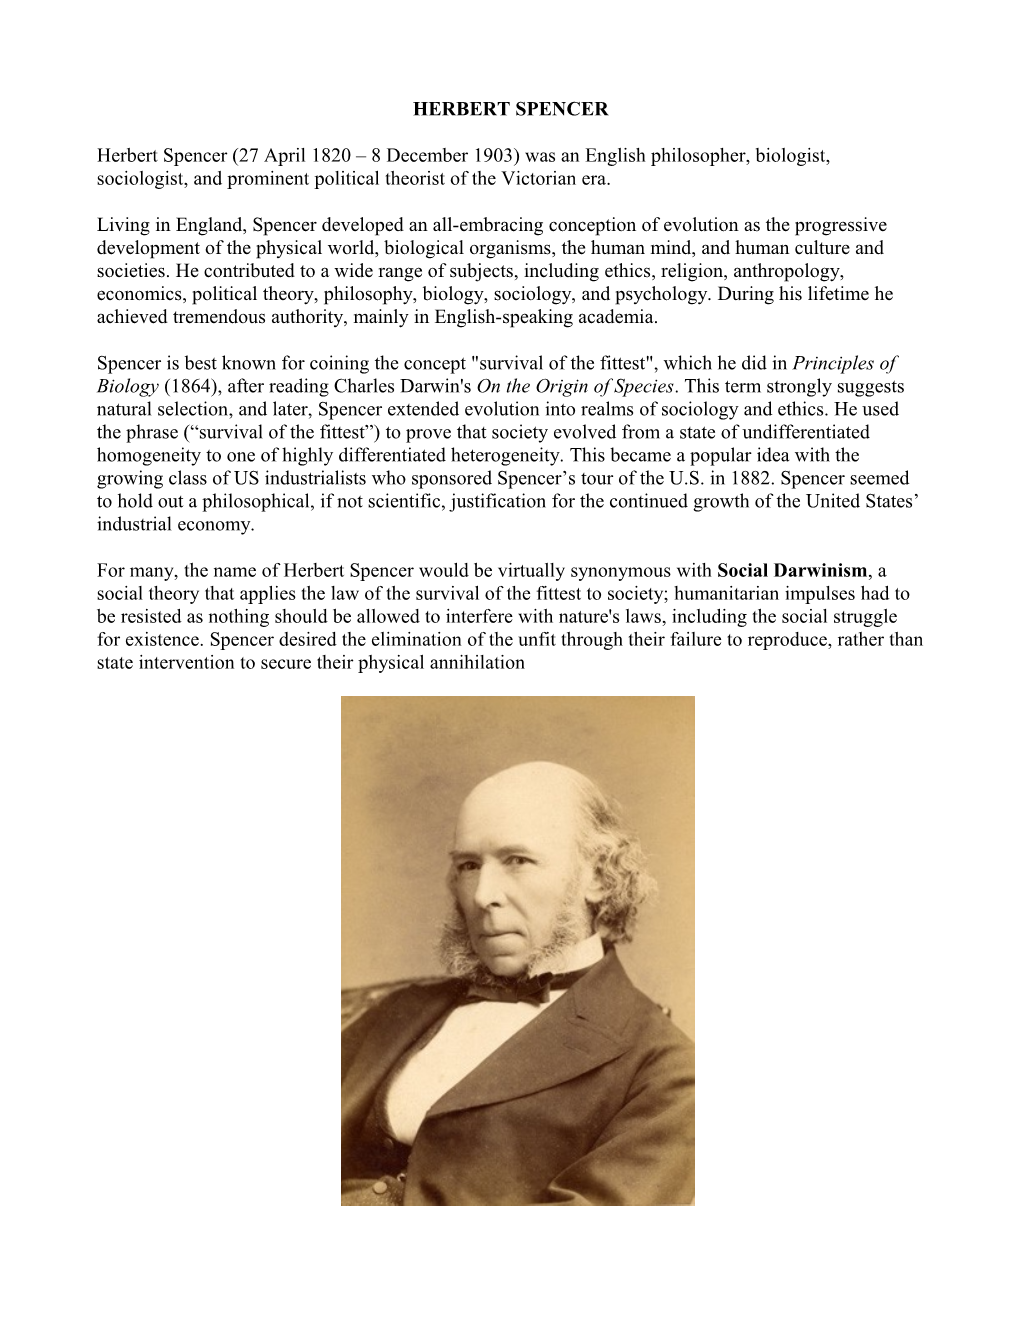 Herbert Spencer (27 April 1820 8 December 1903) Was an English Philosopher, Biologist